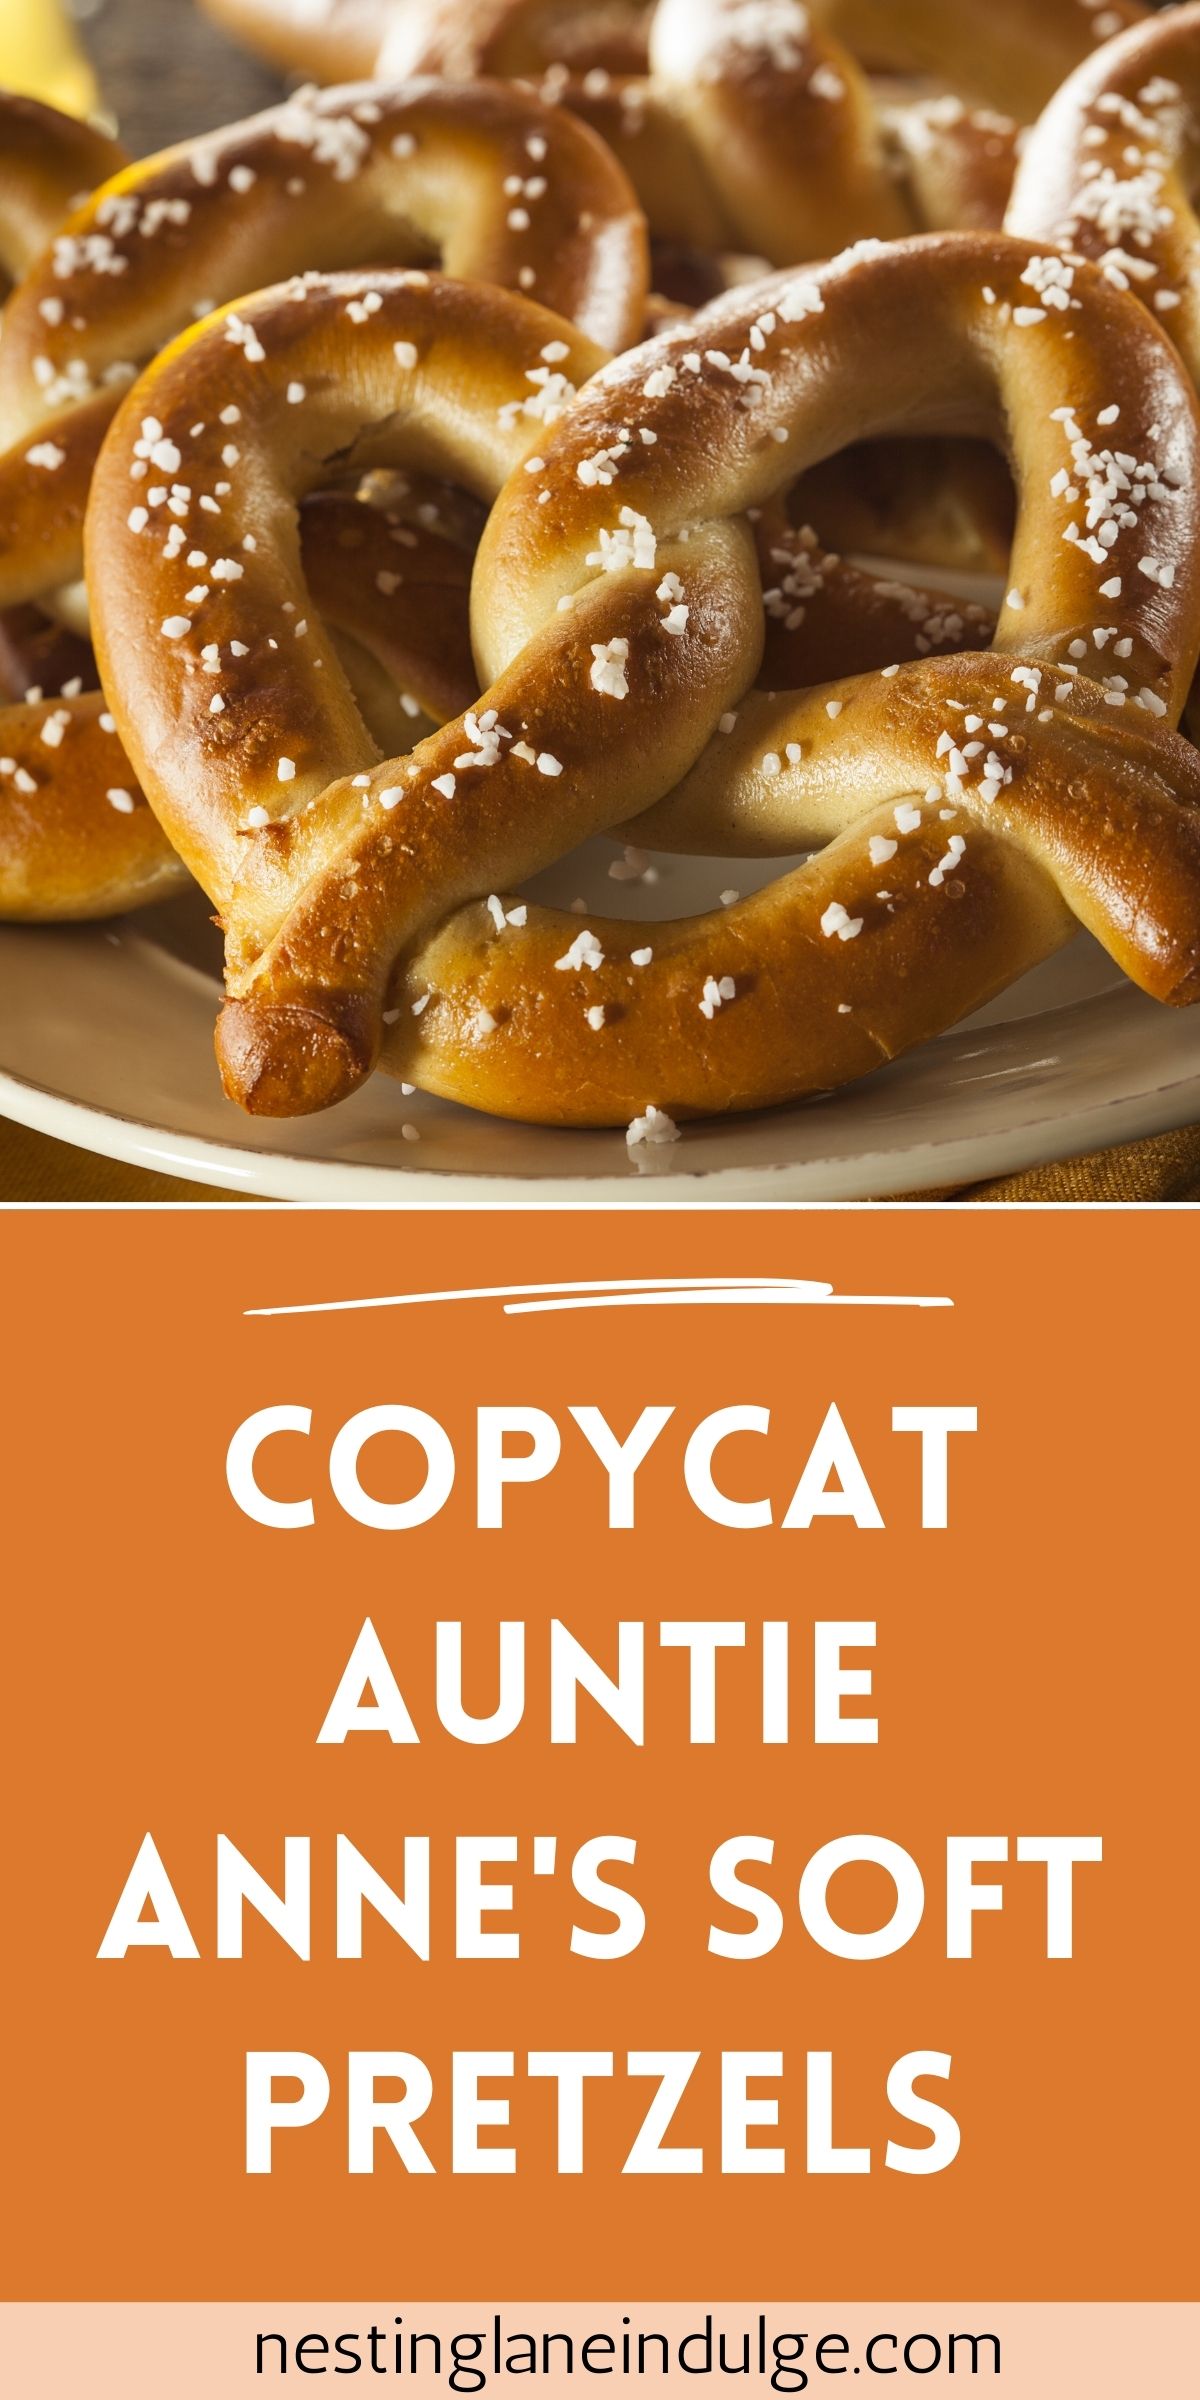 Graphic for Pinterest of Copycat Auntie Anne's Soft Pretzels Recipe.